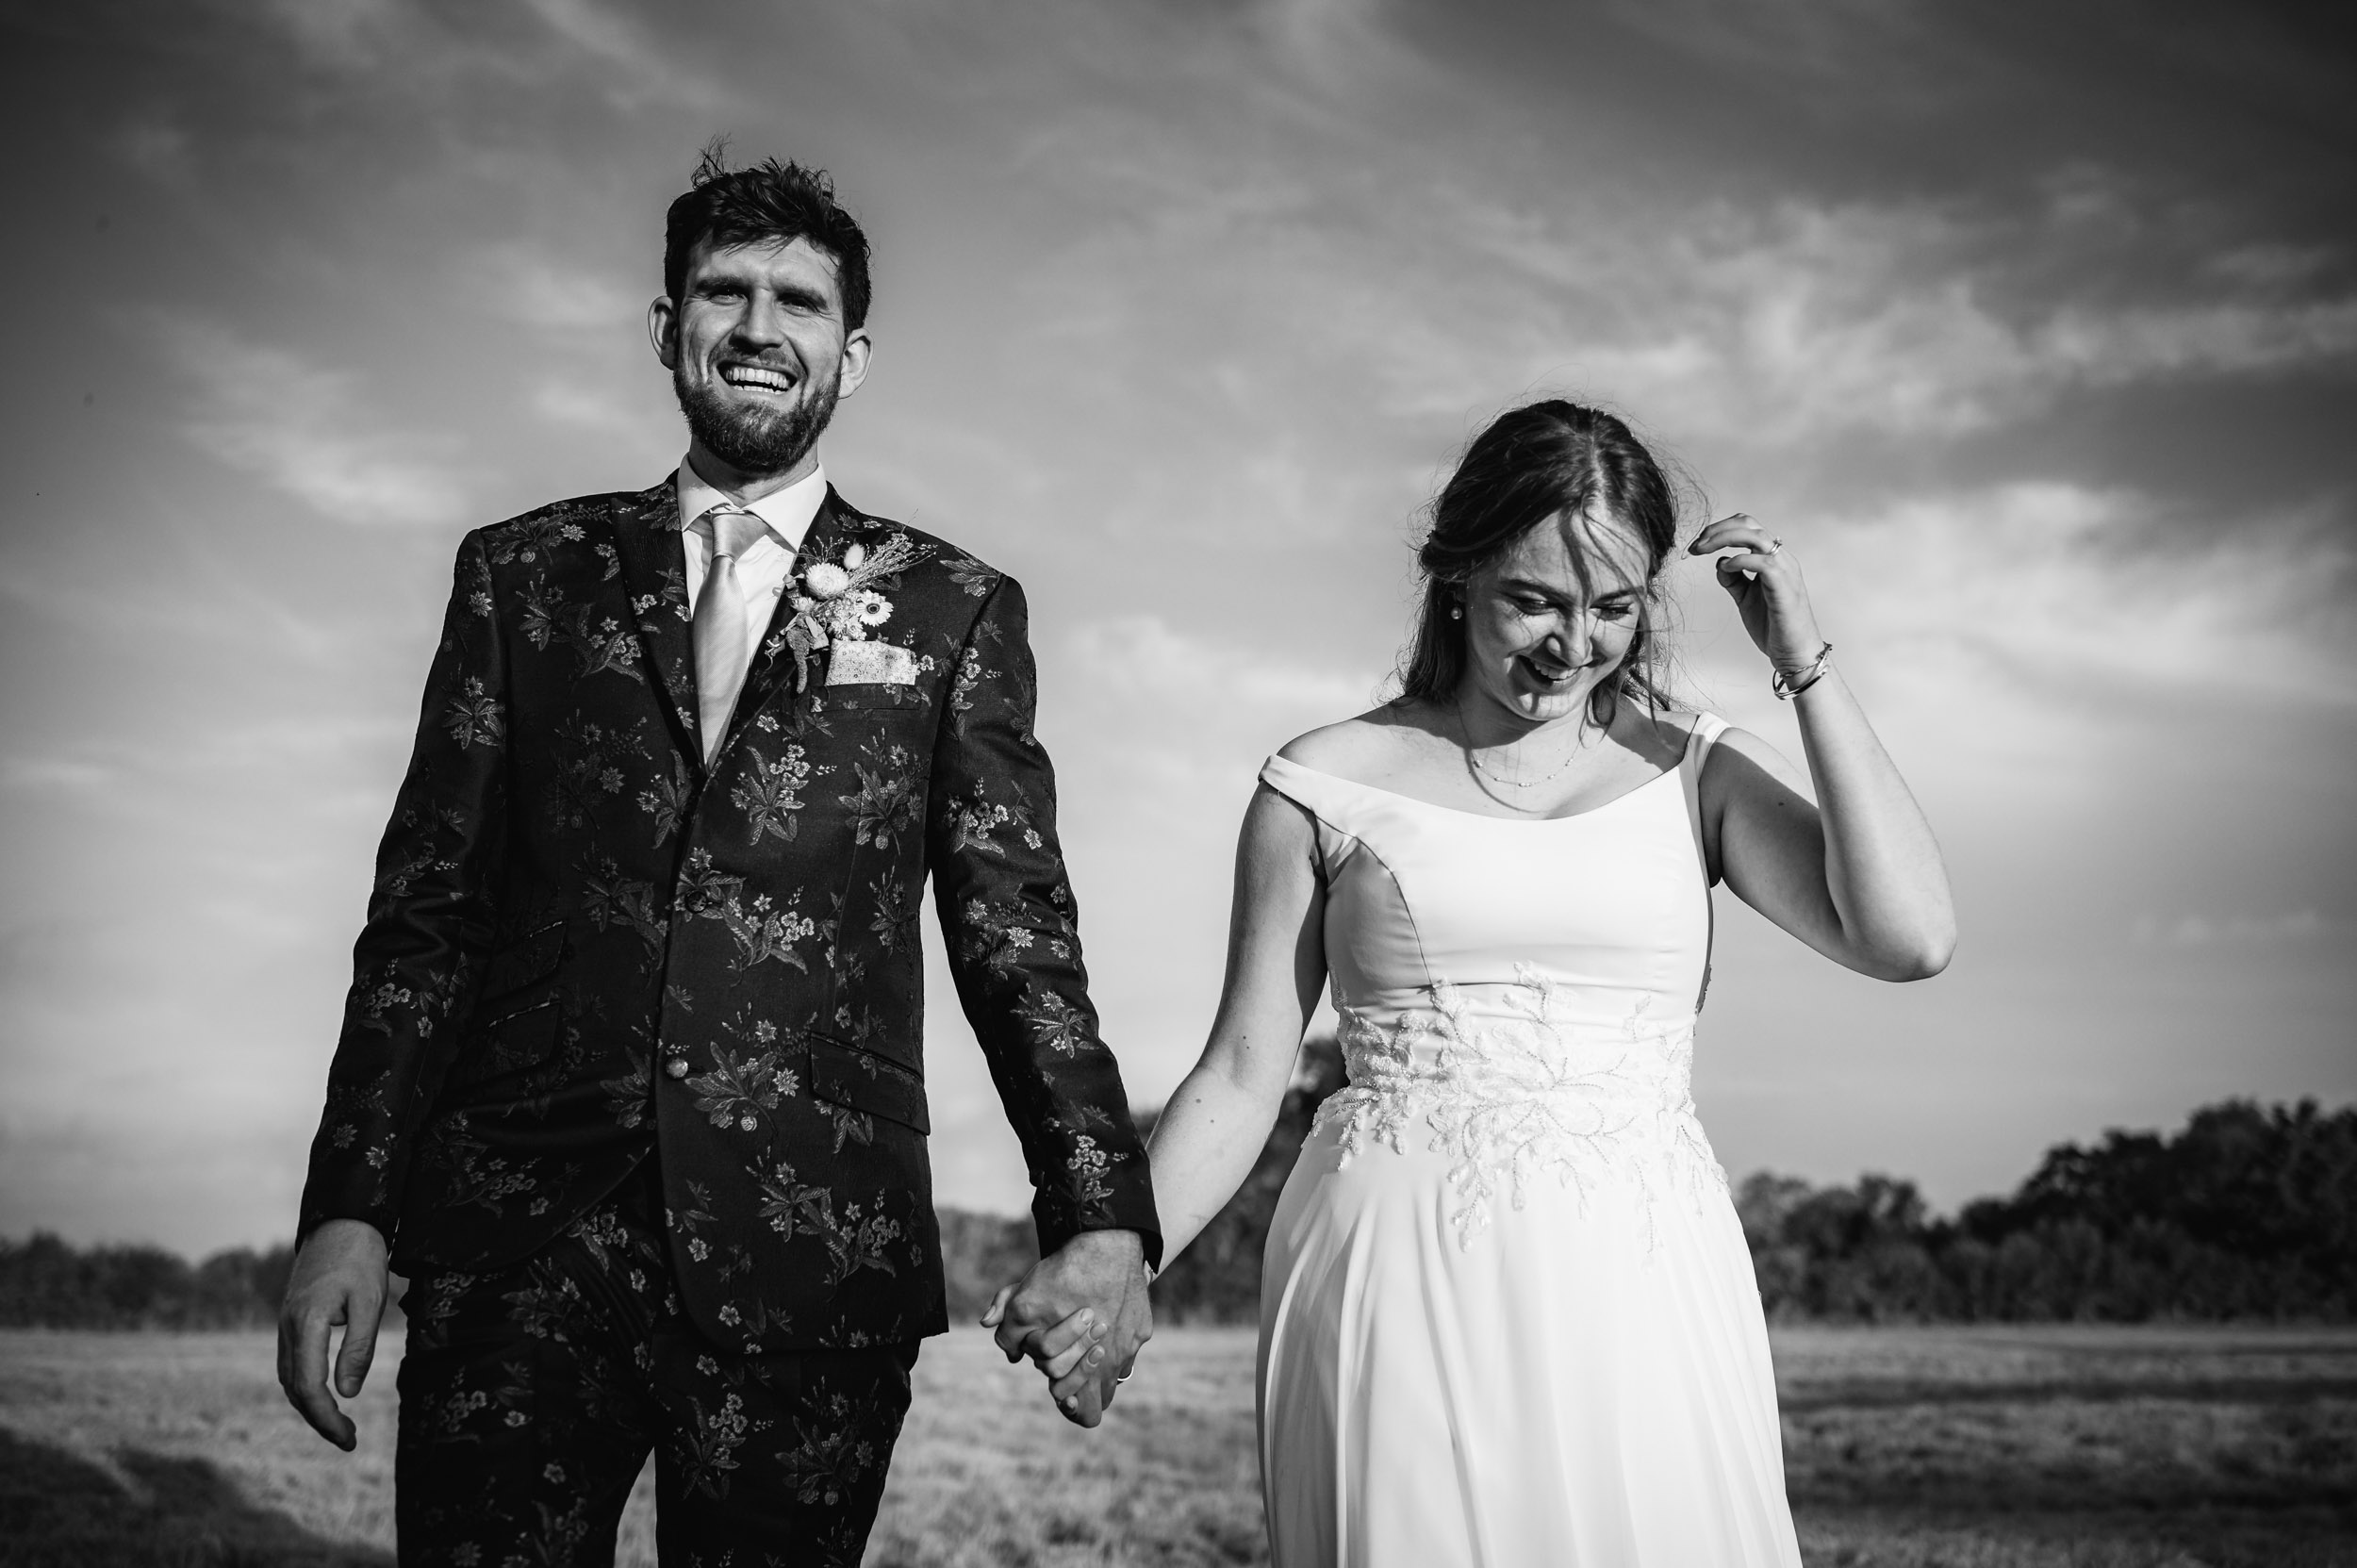 Glebe Farm Barn wedding – Lottie & Christian